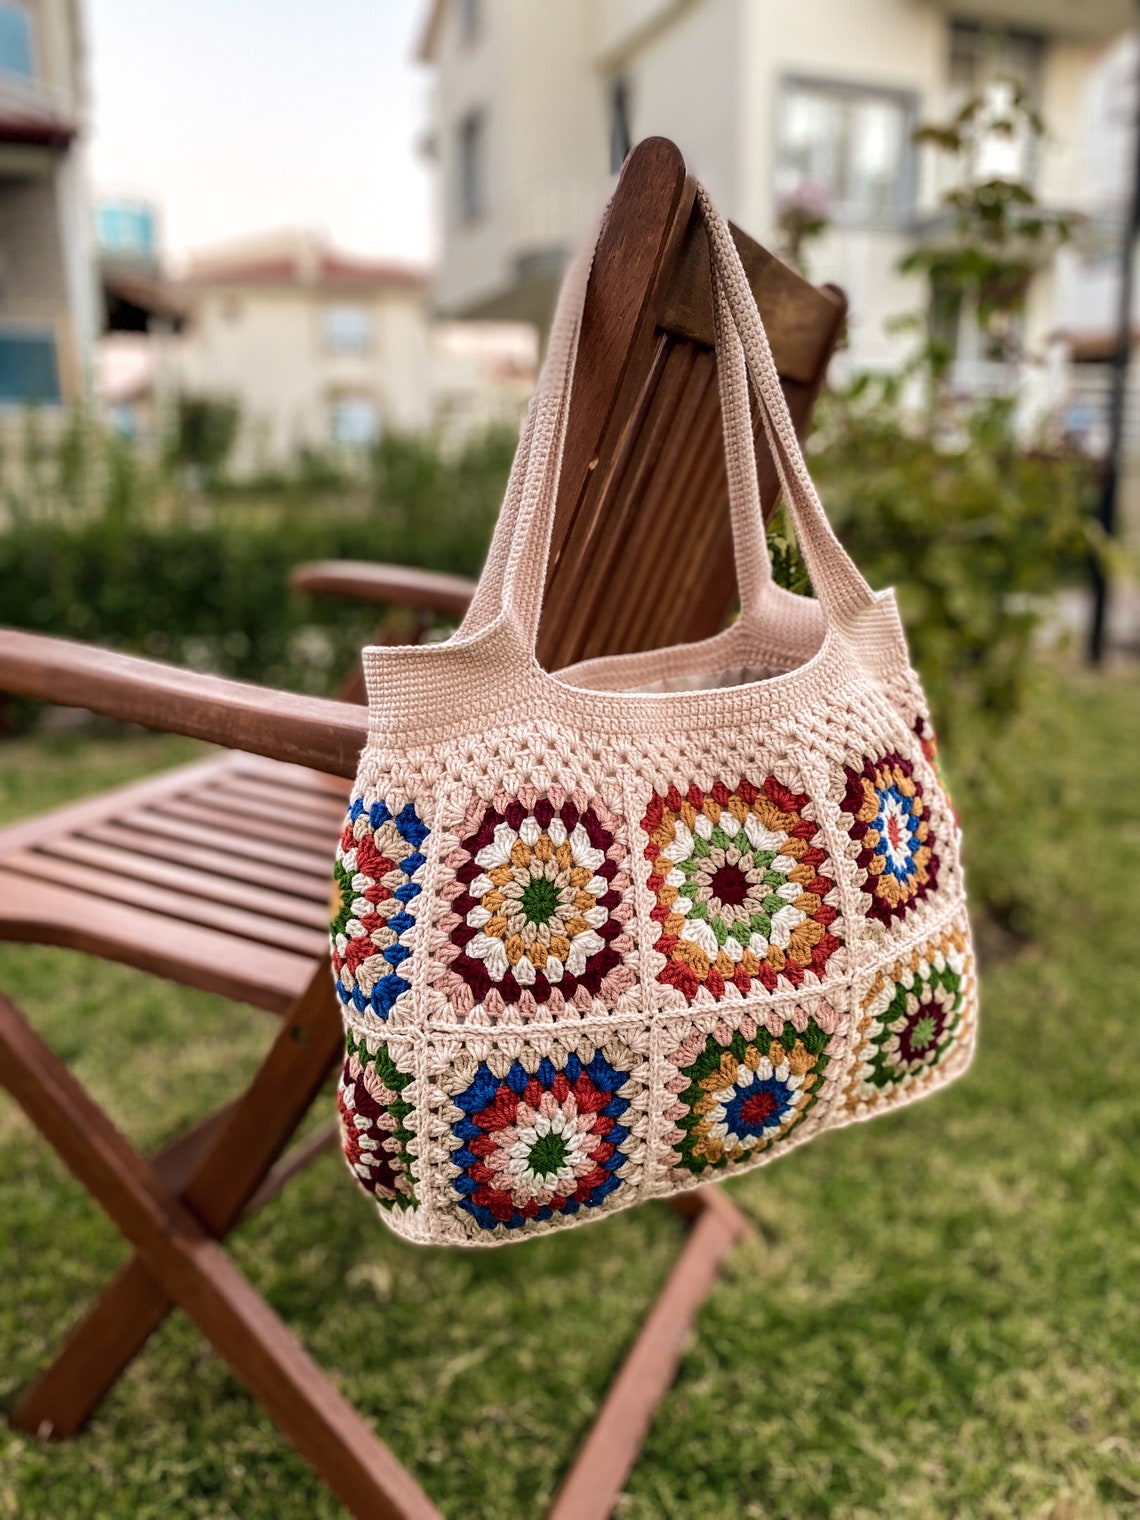 Crochet Granny Square Bag Colorful Boho Chic Handbag Market - Etsy